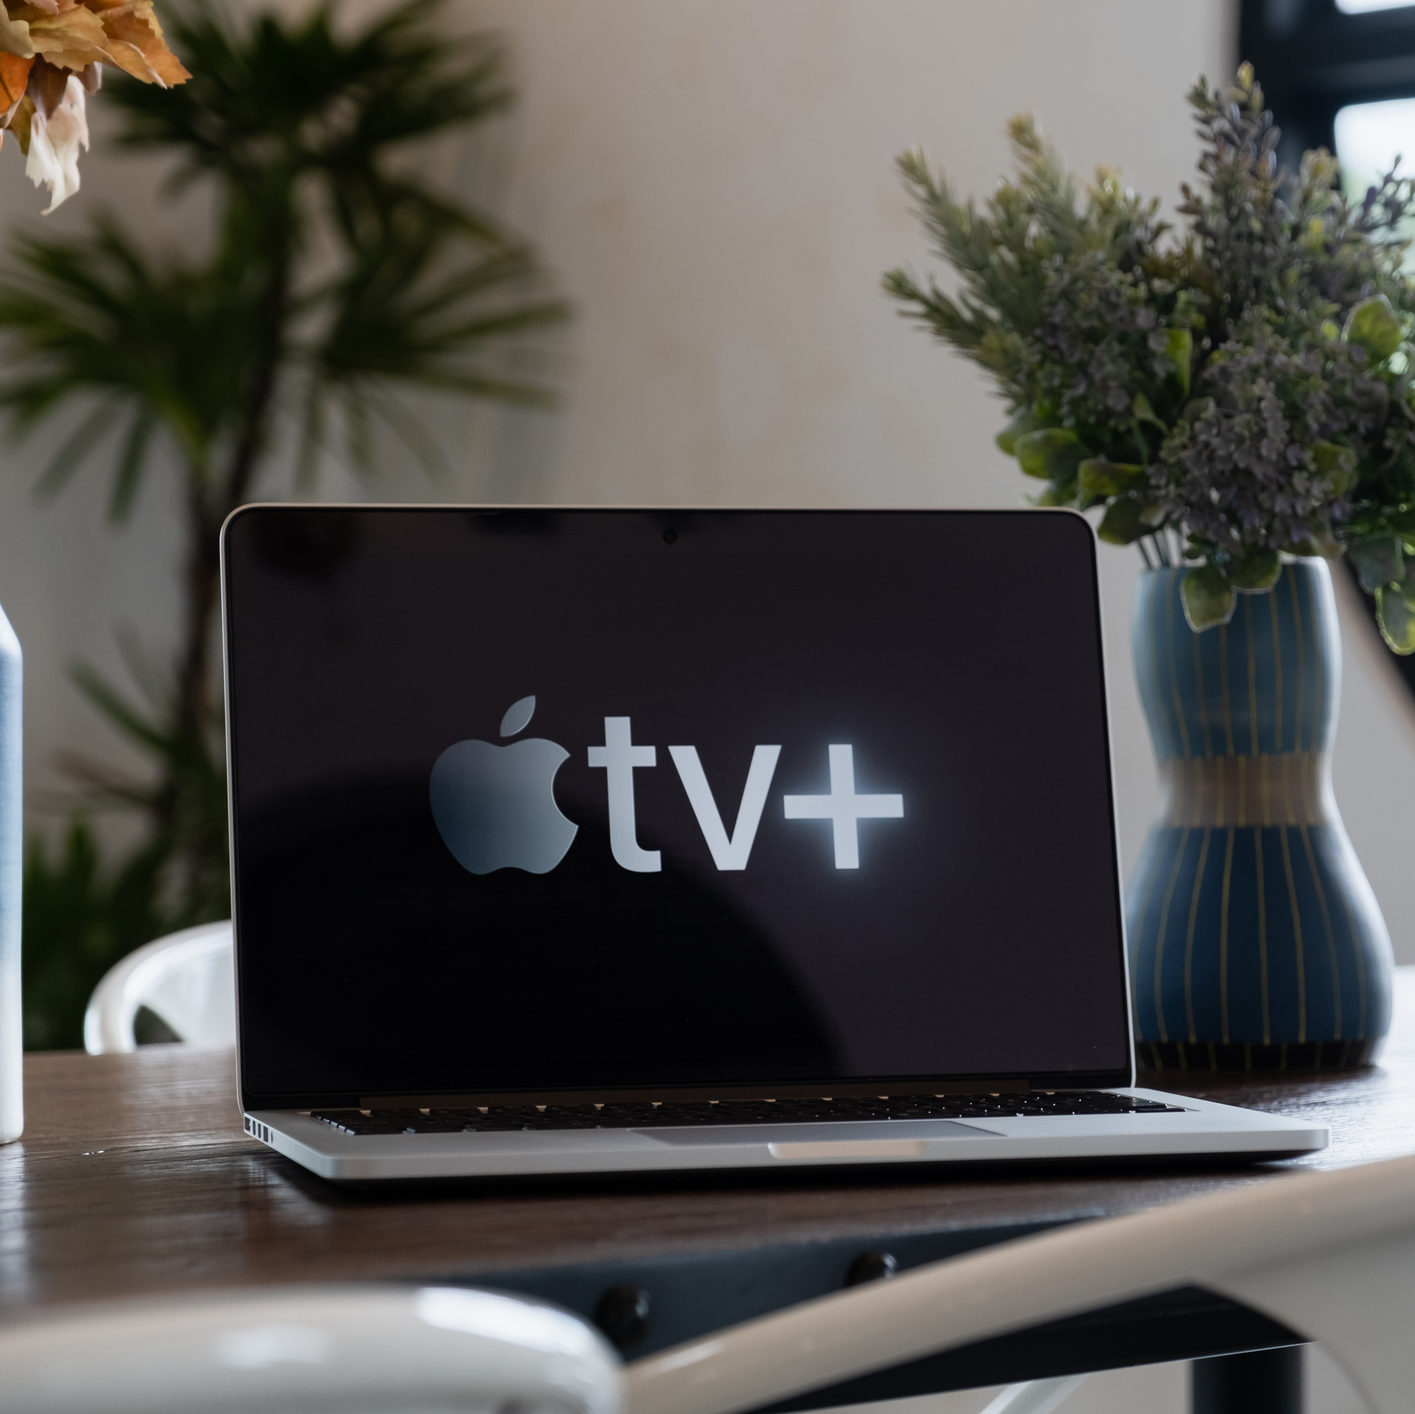 Save $21 on a 1-year Apple TV+ membership